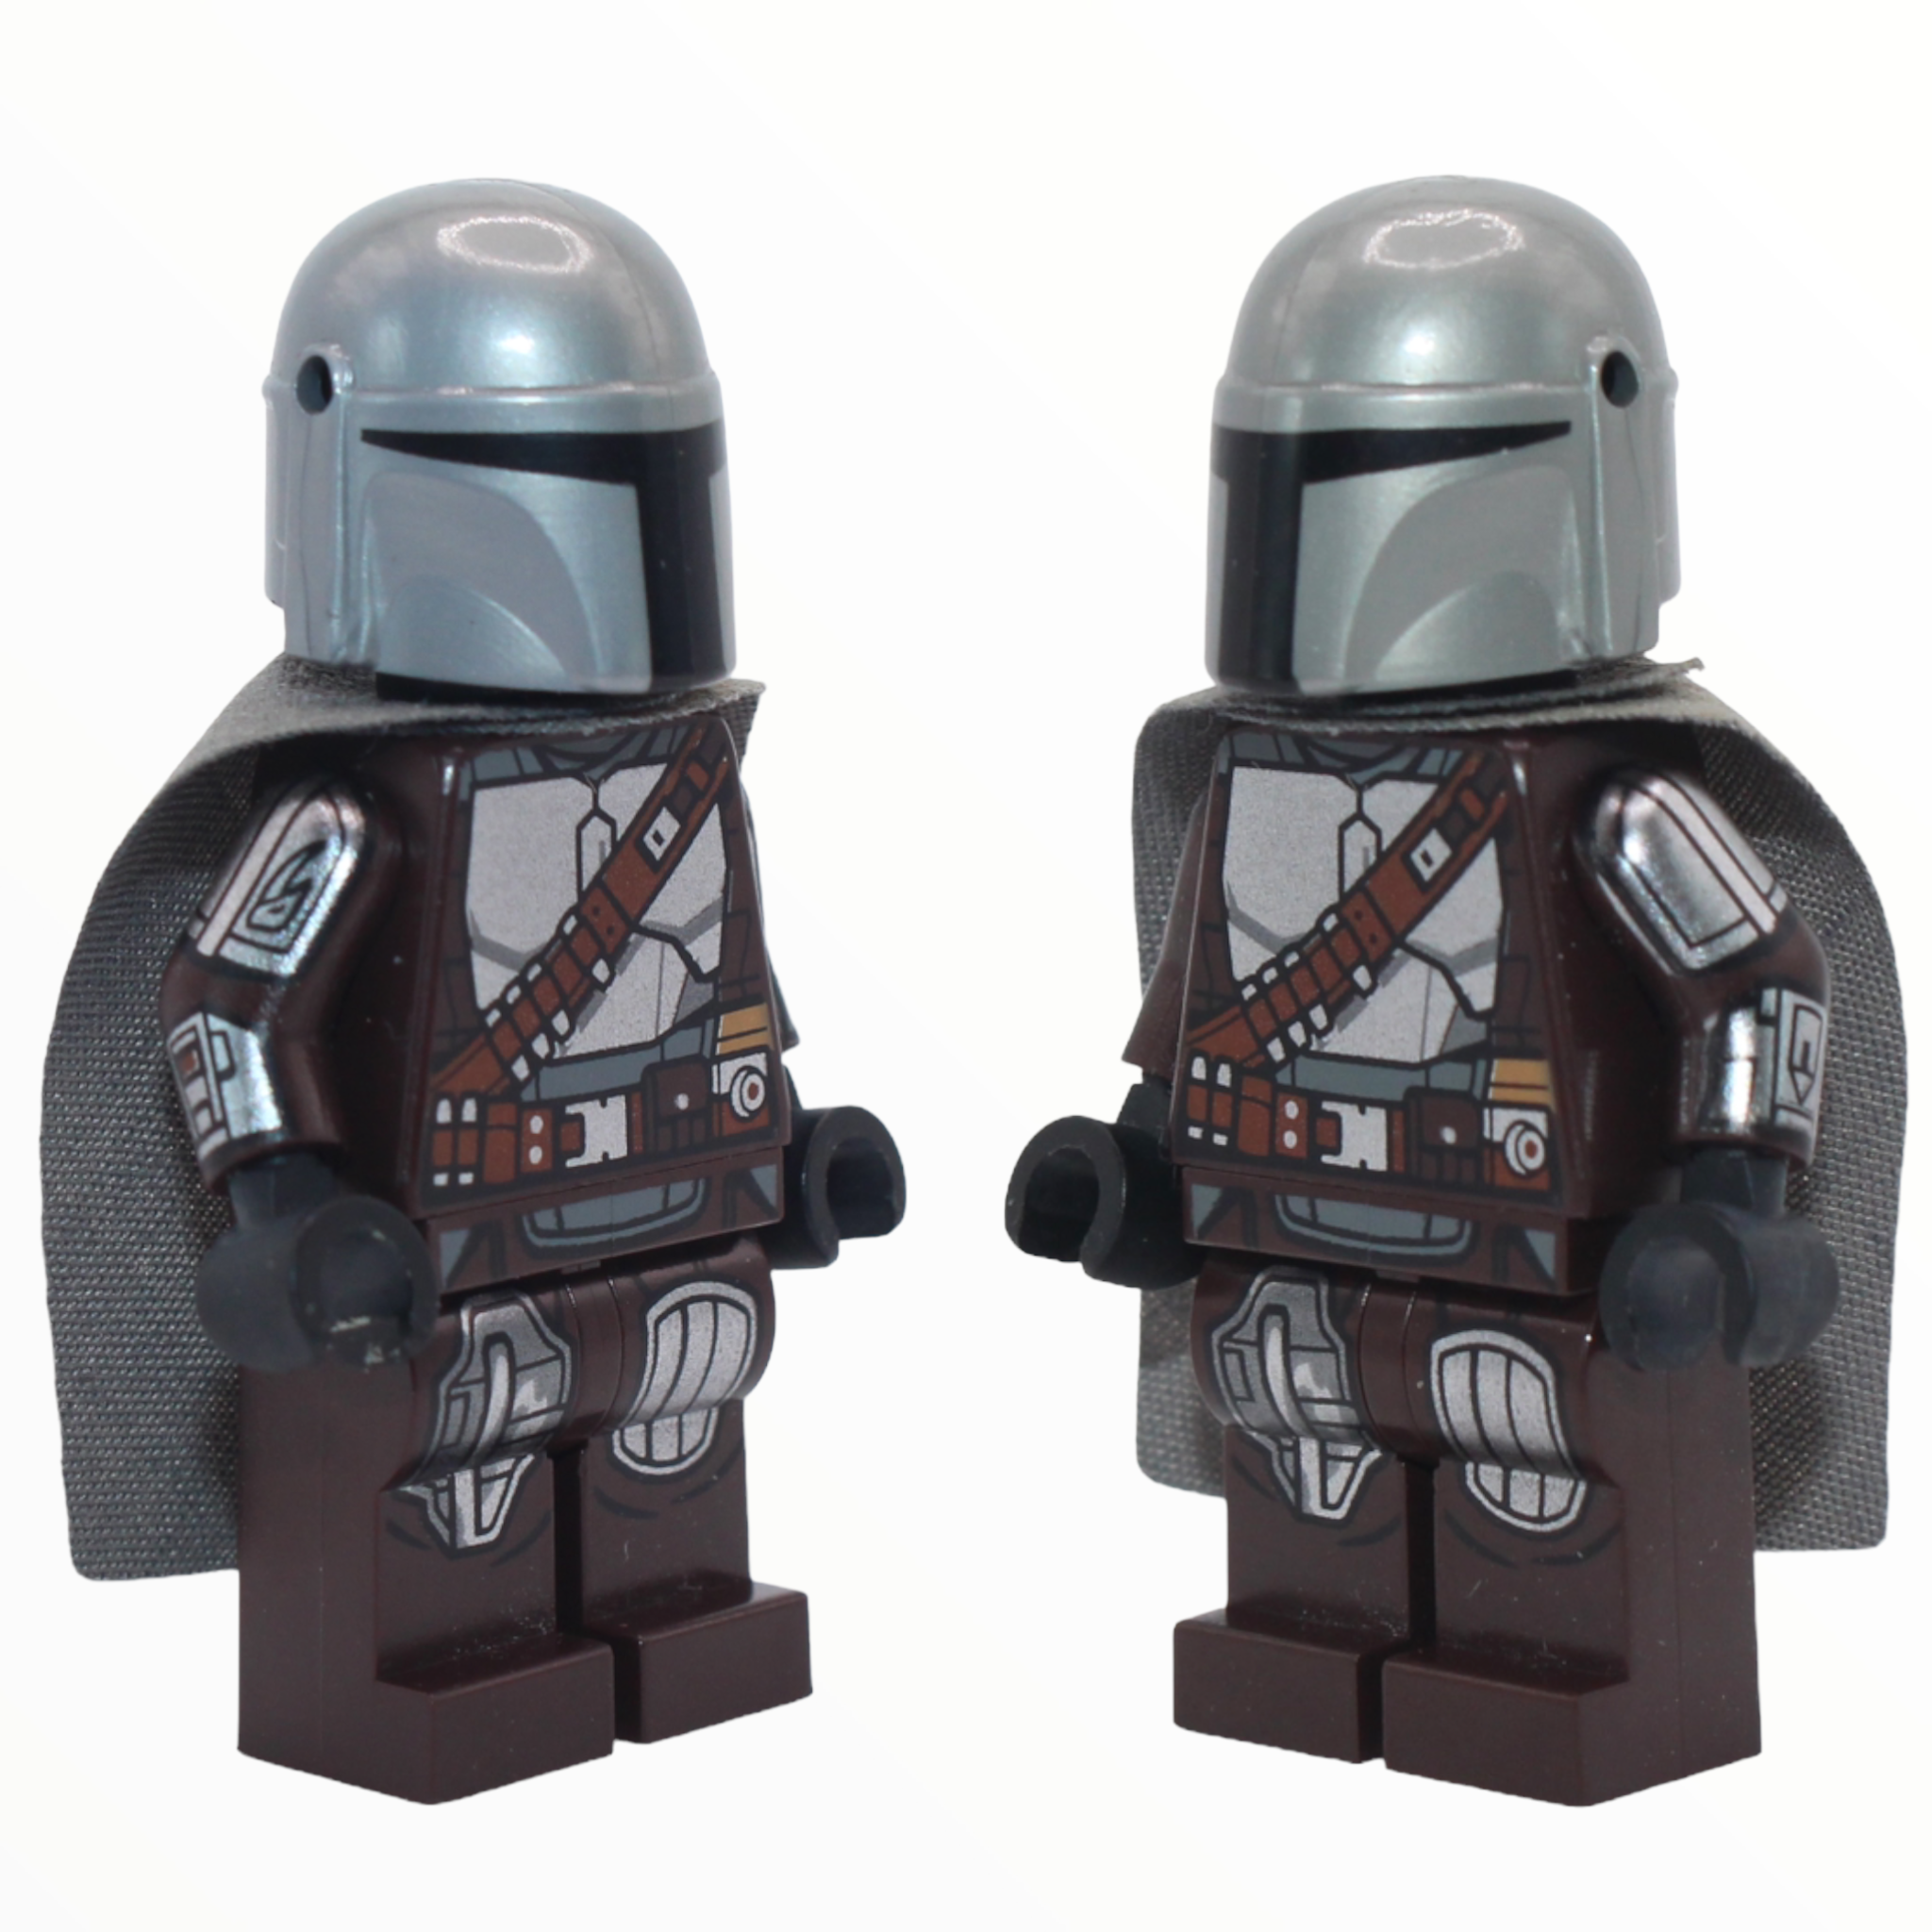 LEGO Star Wars The Mandalorian (Din Djarin/Mando) Minifigure - with Silver  Beskar Armor and Cape